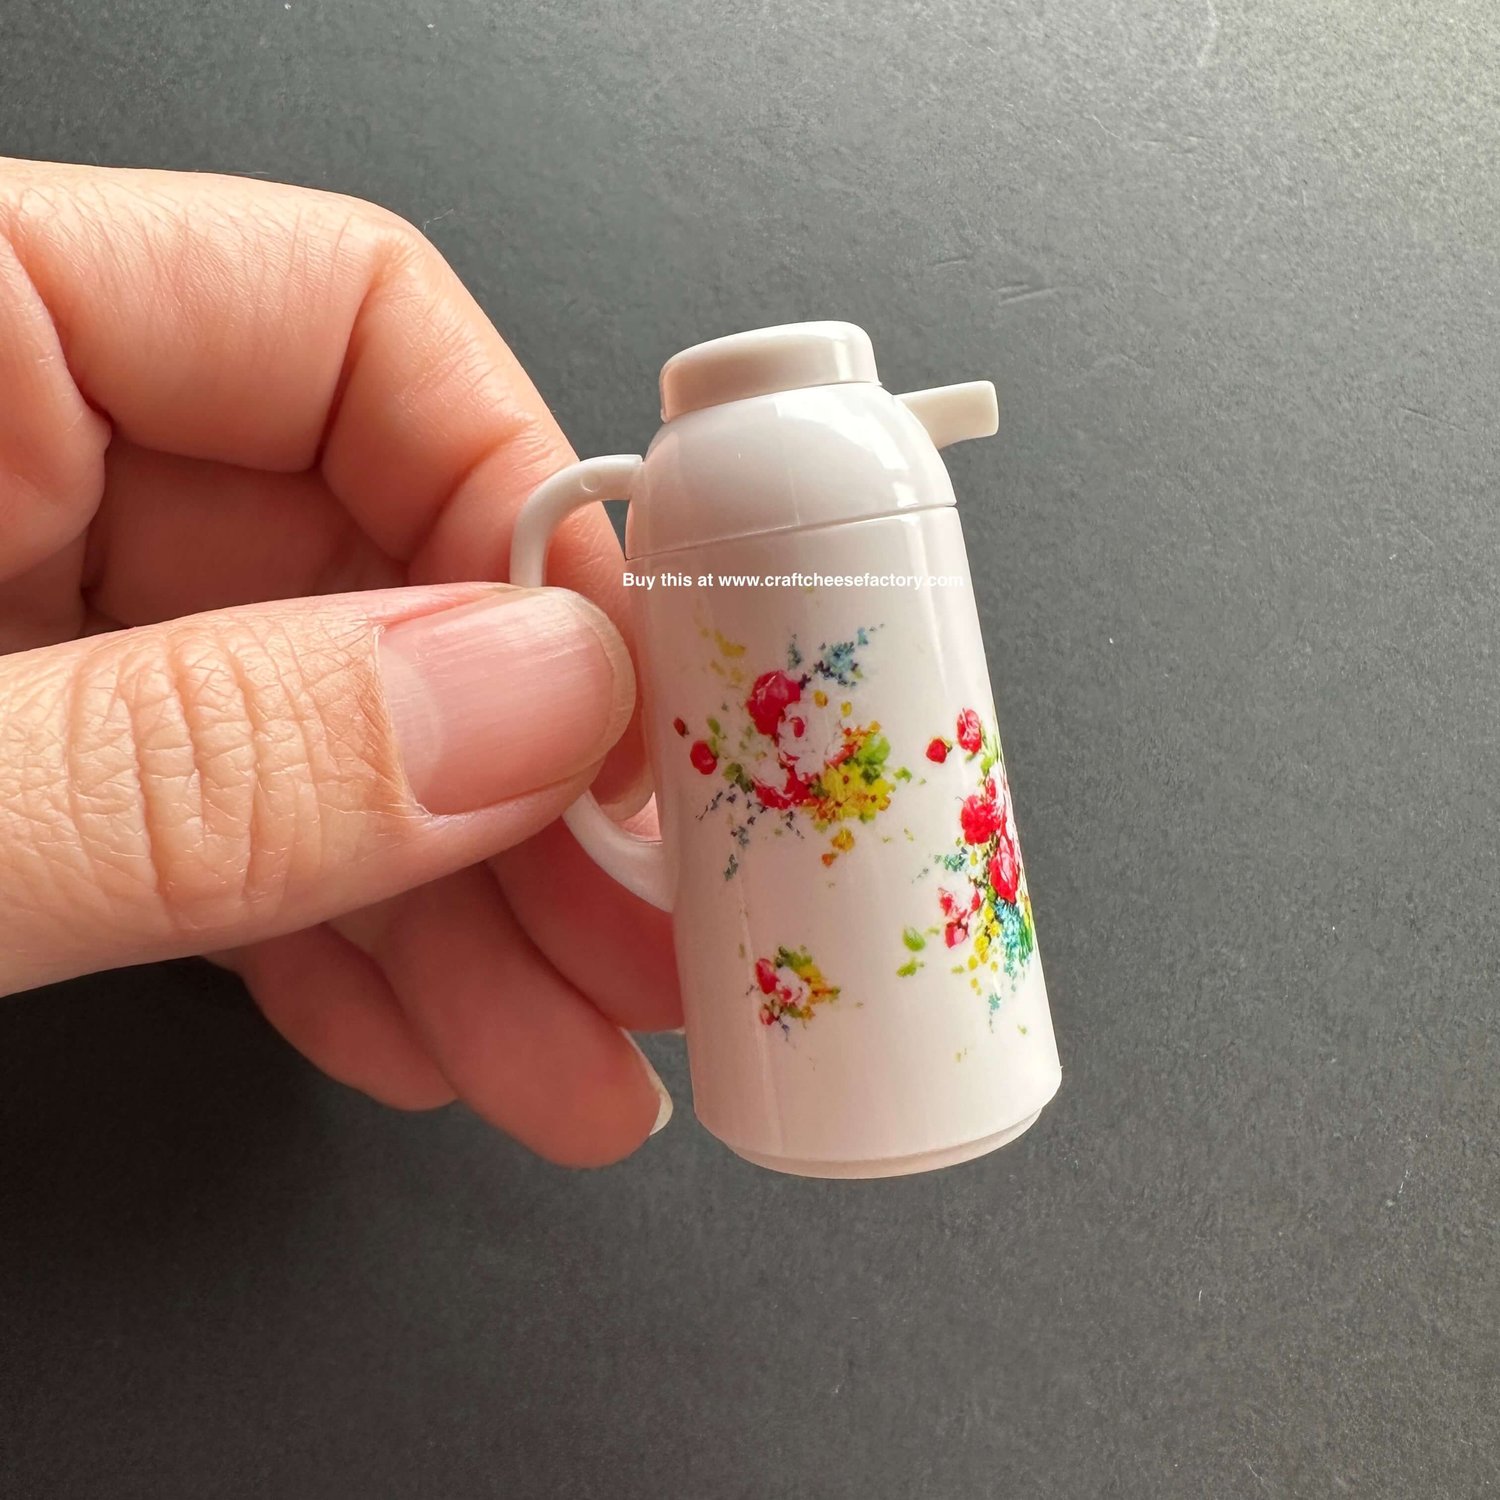 Vintage miniature Zojirushi toy kettle flask —